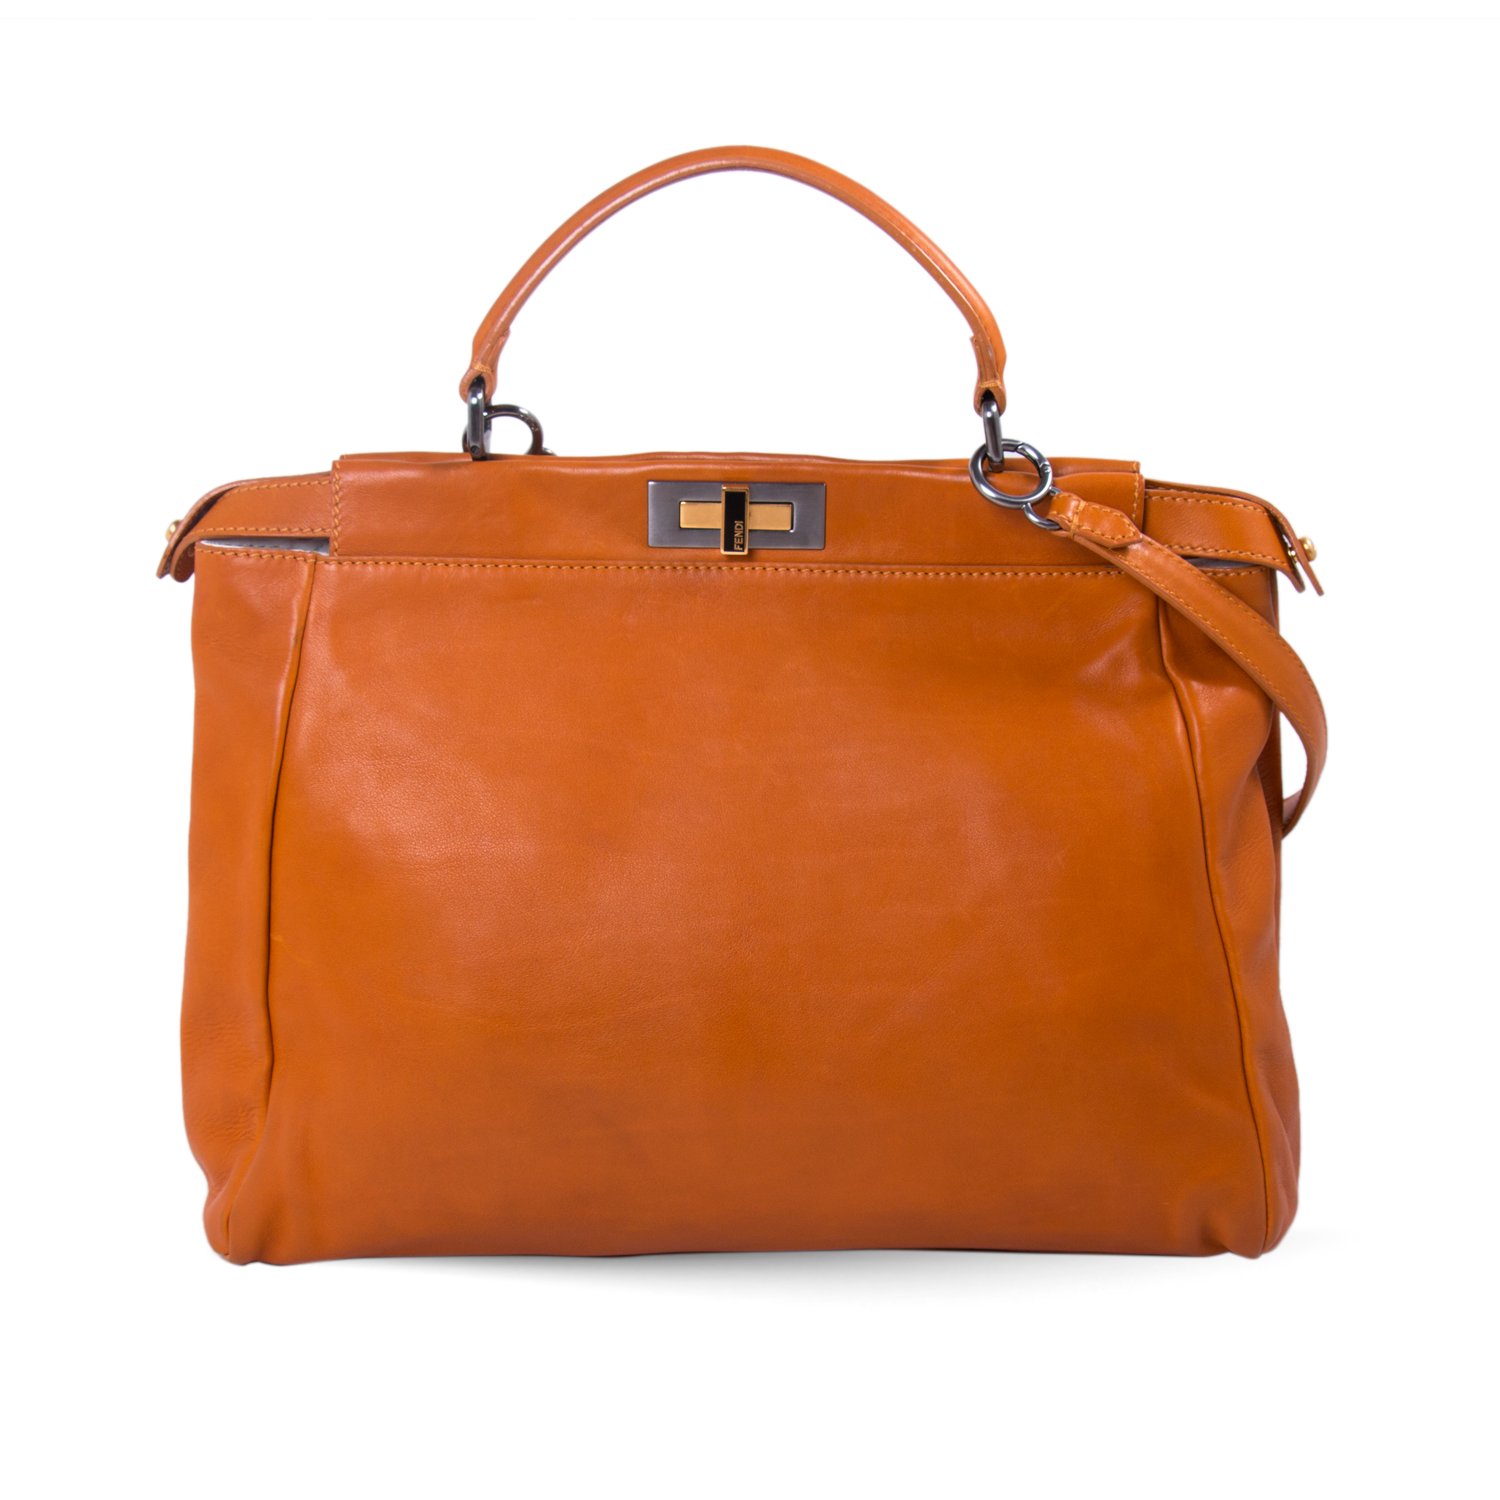 Fendi Orange Leather Large Peekaboo Top Handle Bag